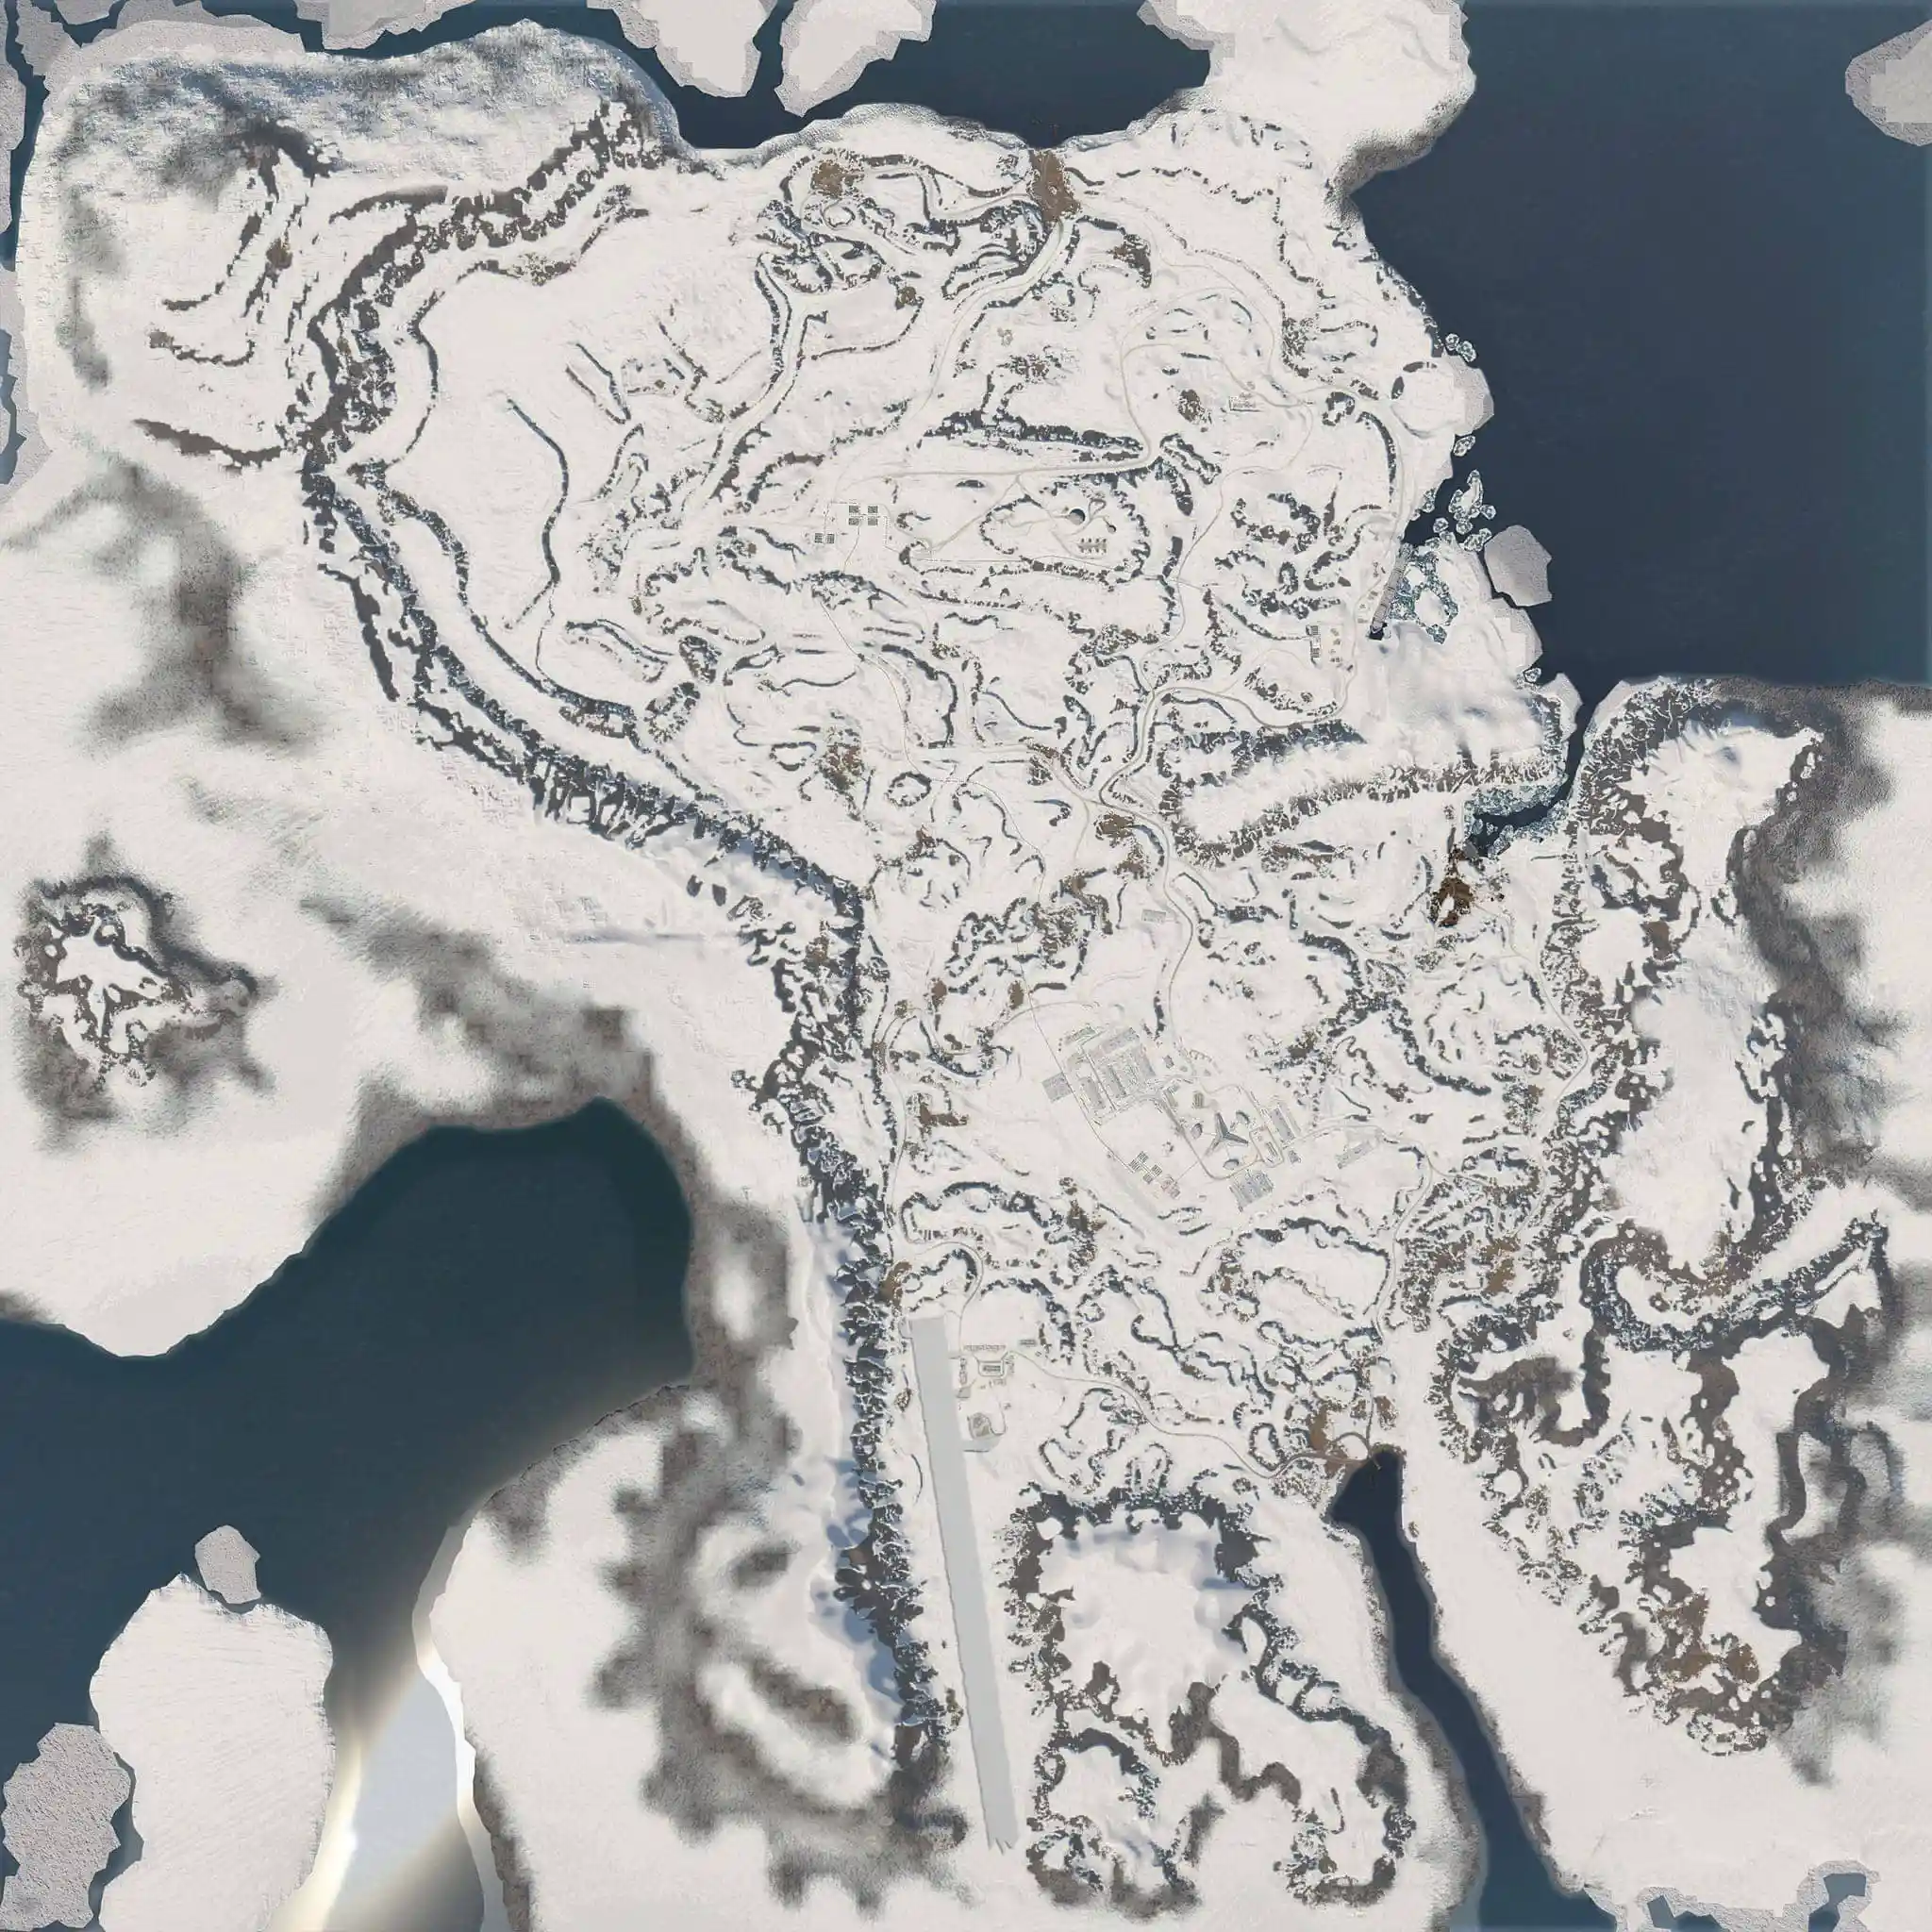 avg_arctic_tankmap-min.jpg